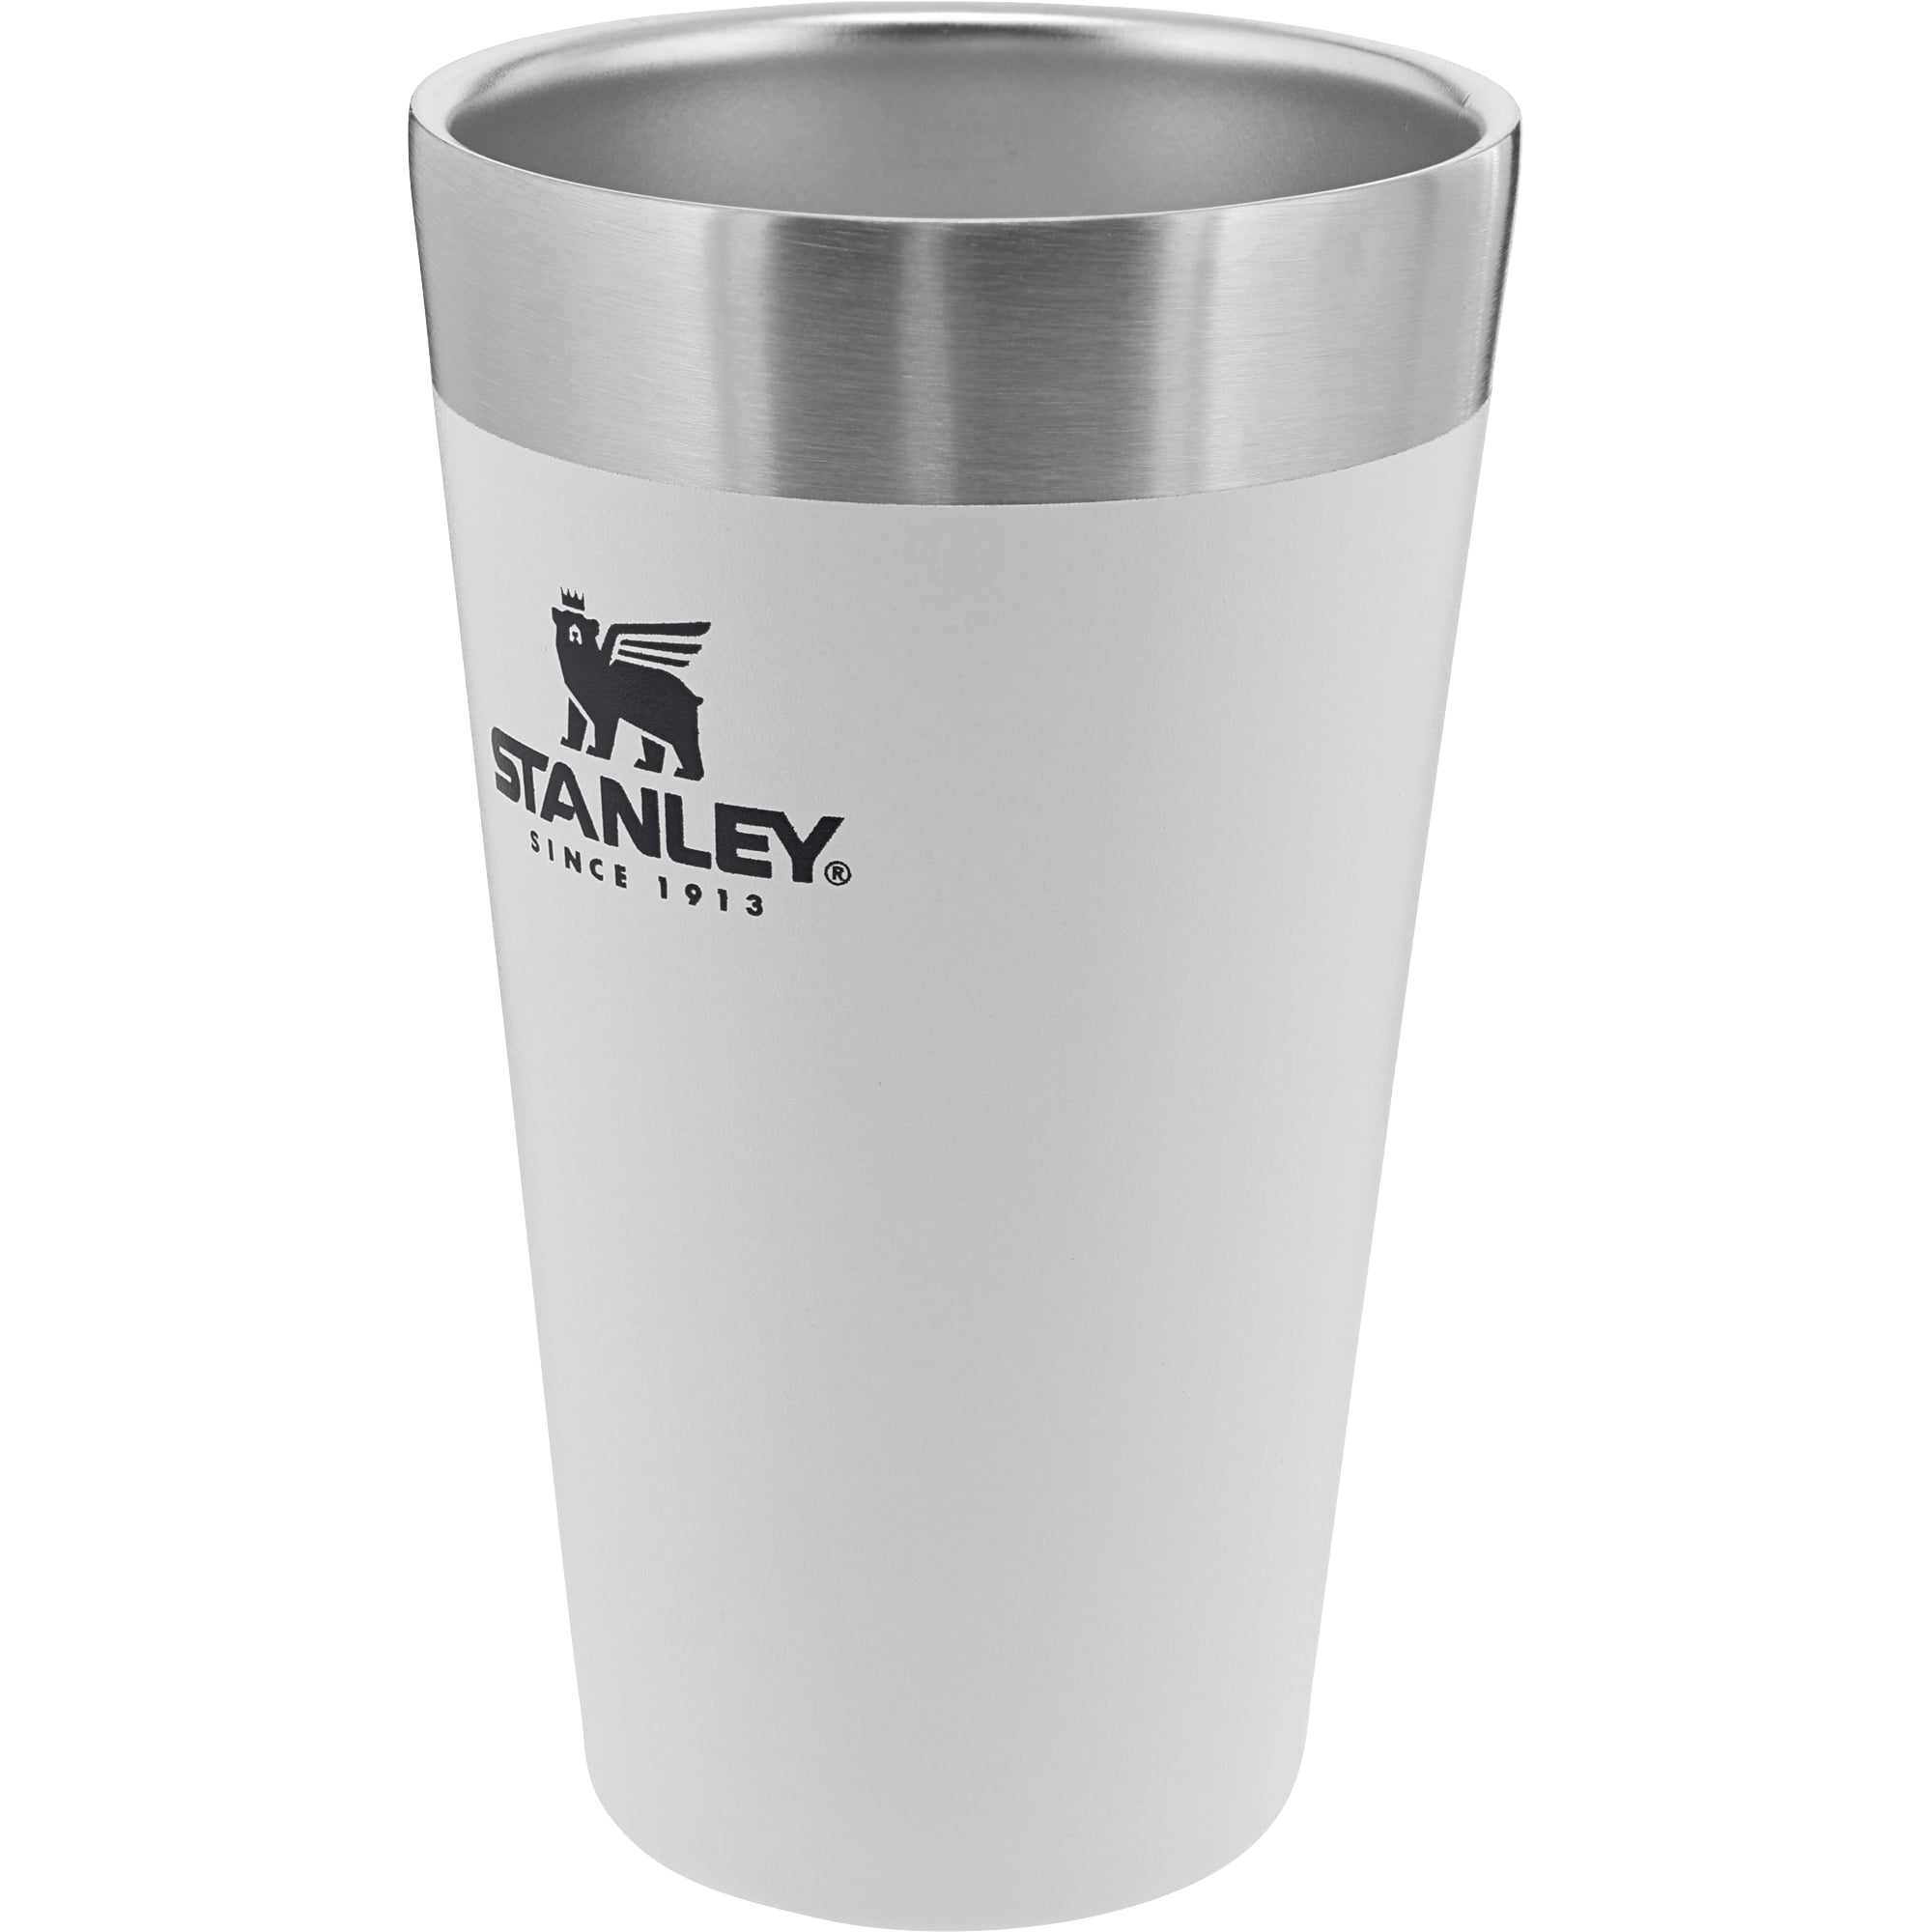 Stanley Stainless Steel Vacuum Insulated Pint Glass Beer Mug, 16 